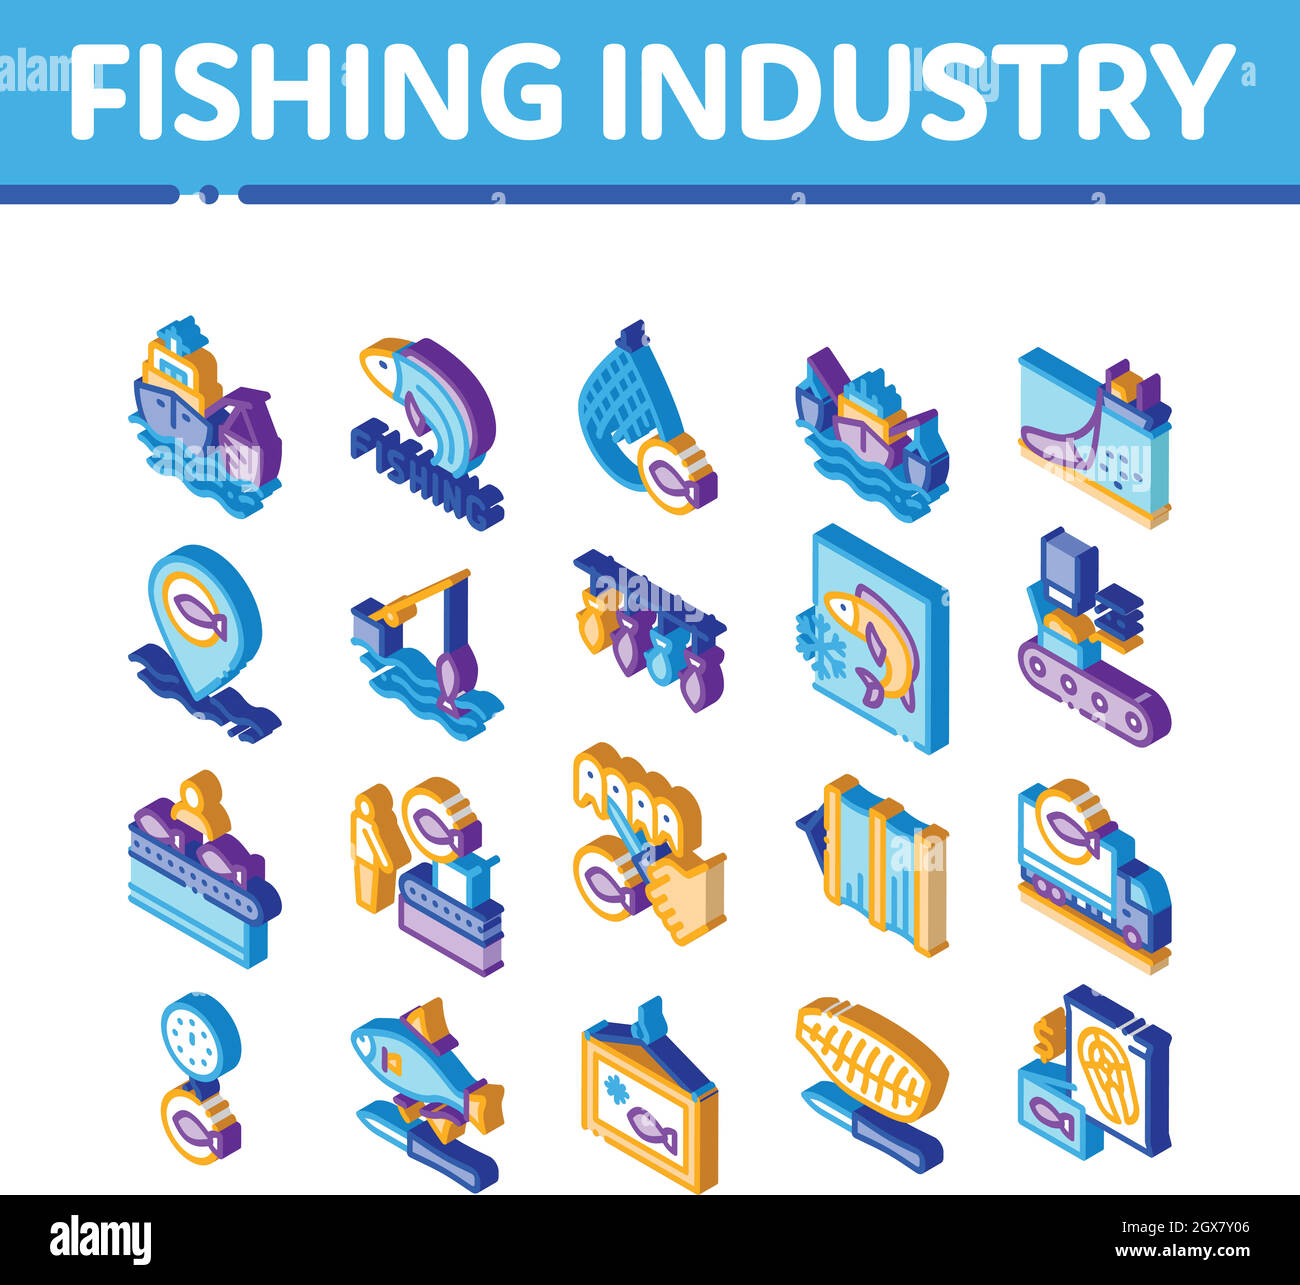 Fischerei Industrie Business Process Icons Set Vector Stock Vektor